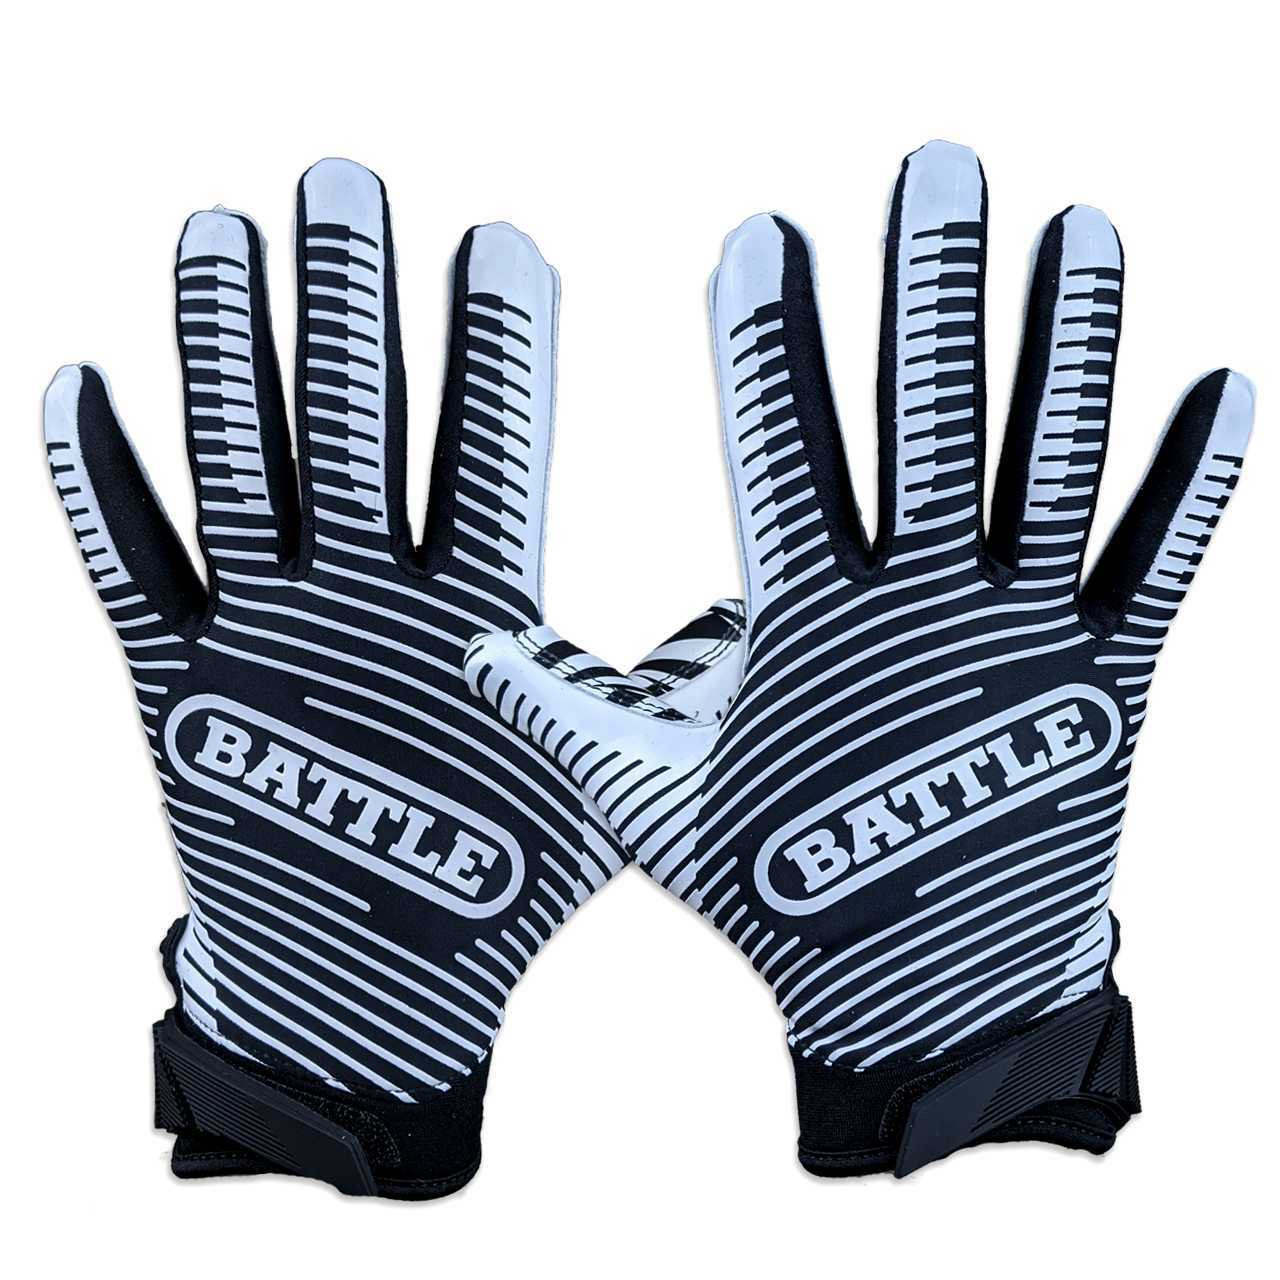 Battle Sports Adult Gradient Doom 1.0 Football Gloves - Red/White/Blue Sz  XL